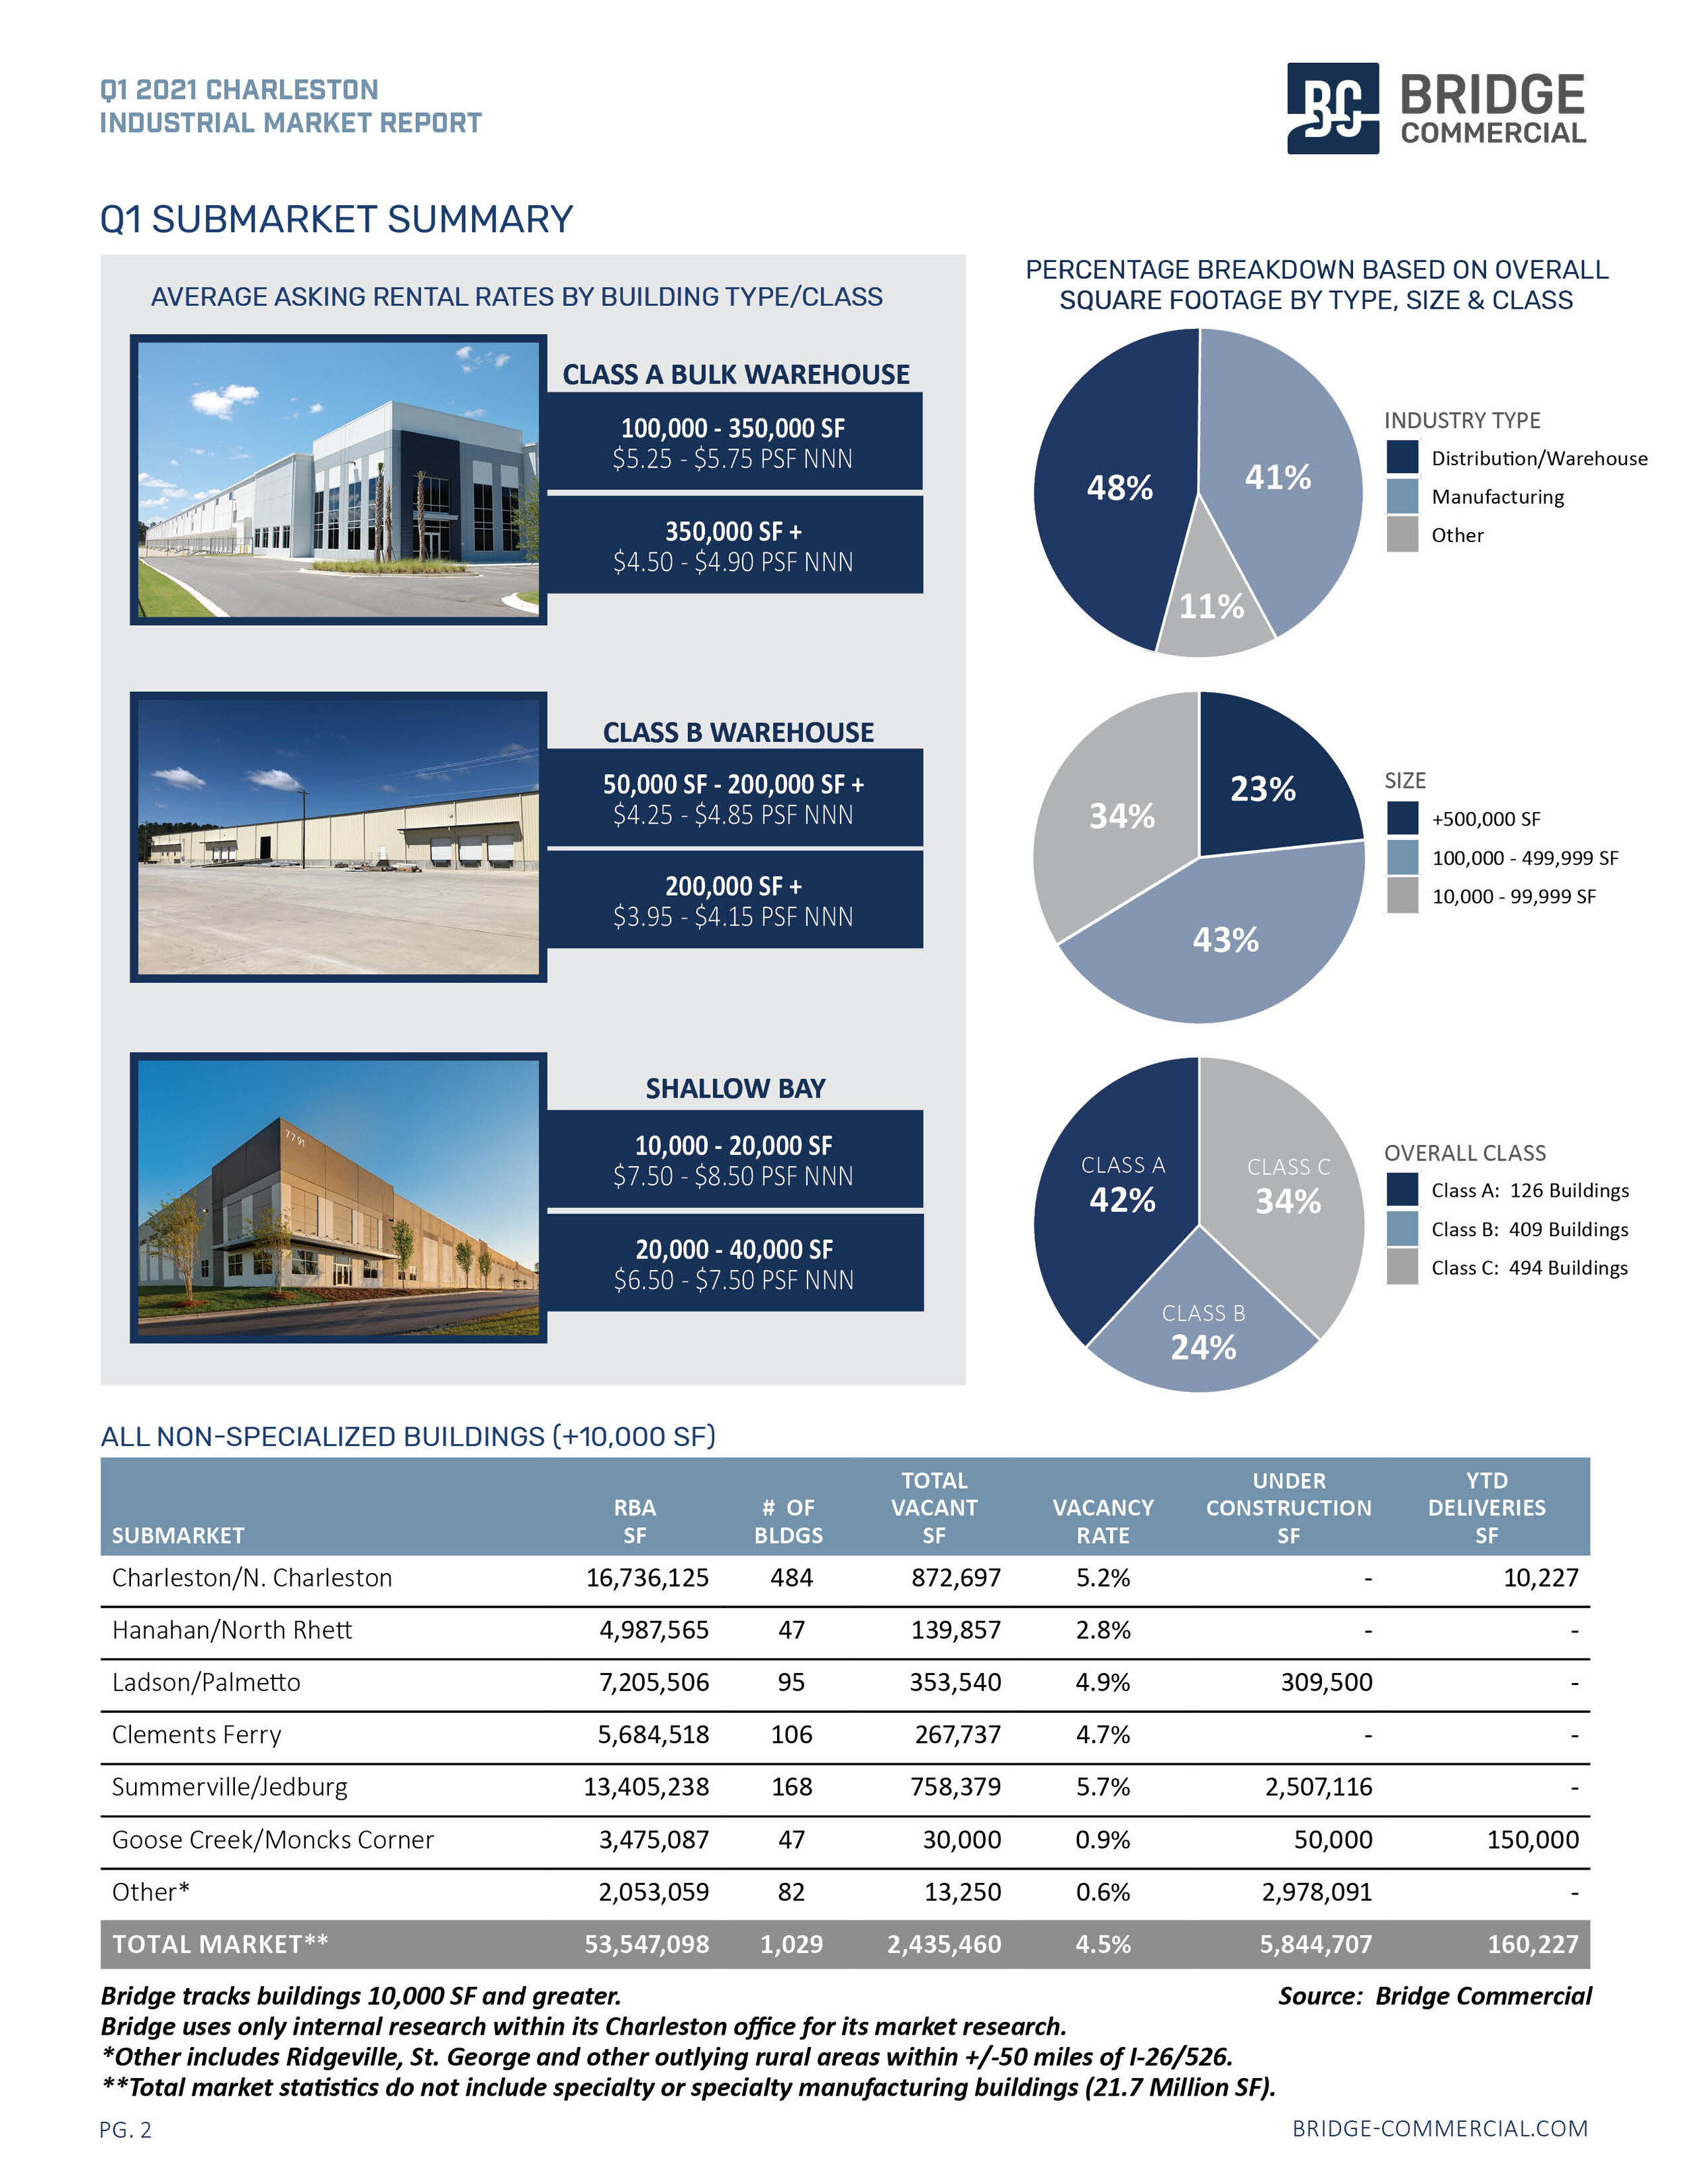 Q1 2021 Charleston Industrial Market Report_Bridge Commercial2.jpg